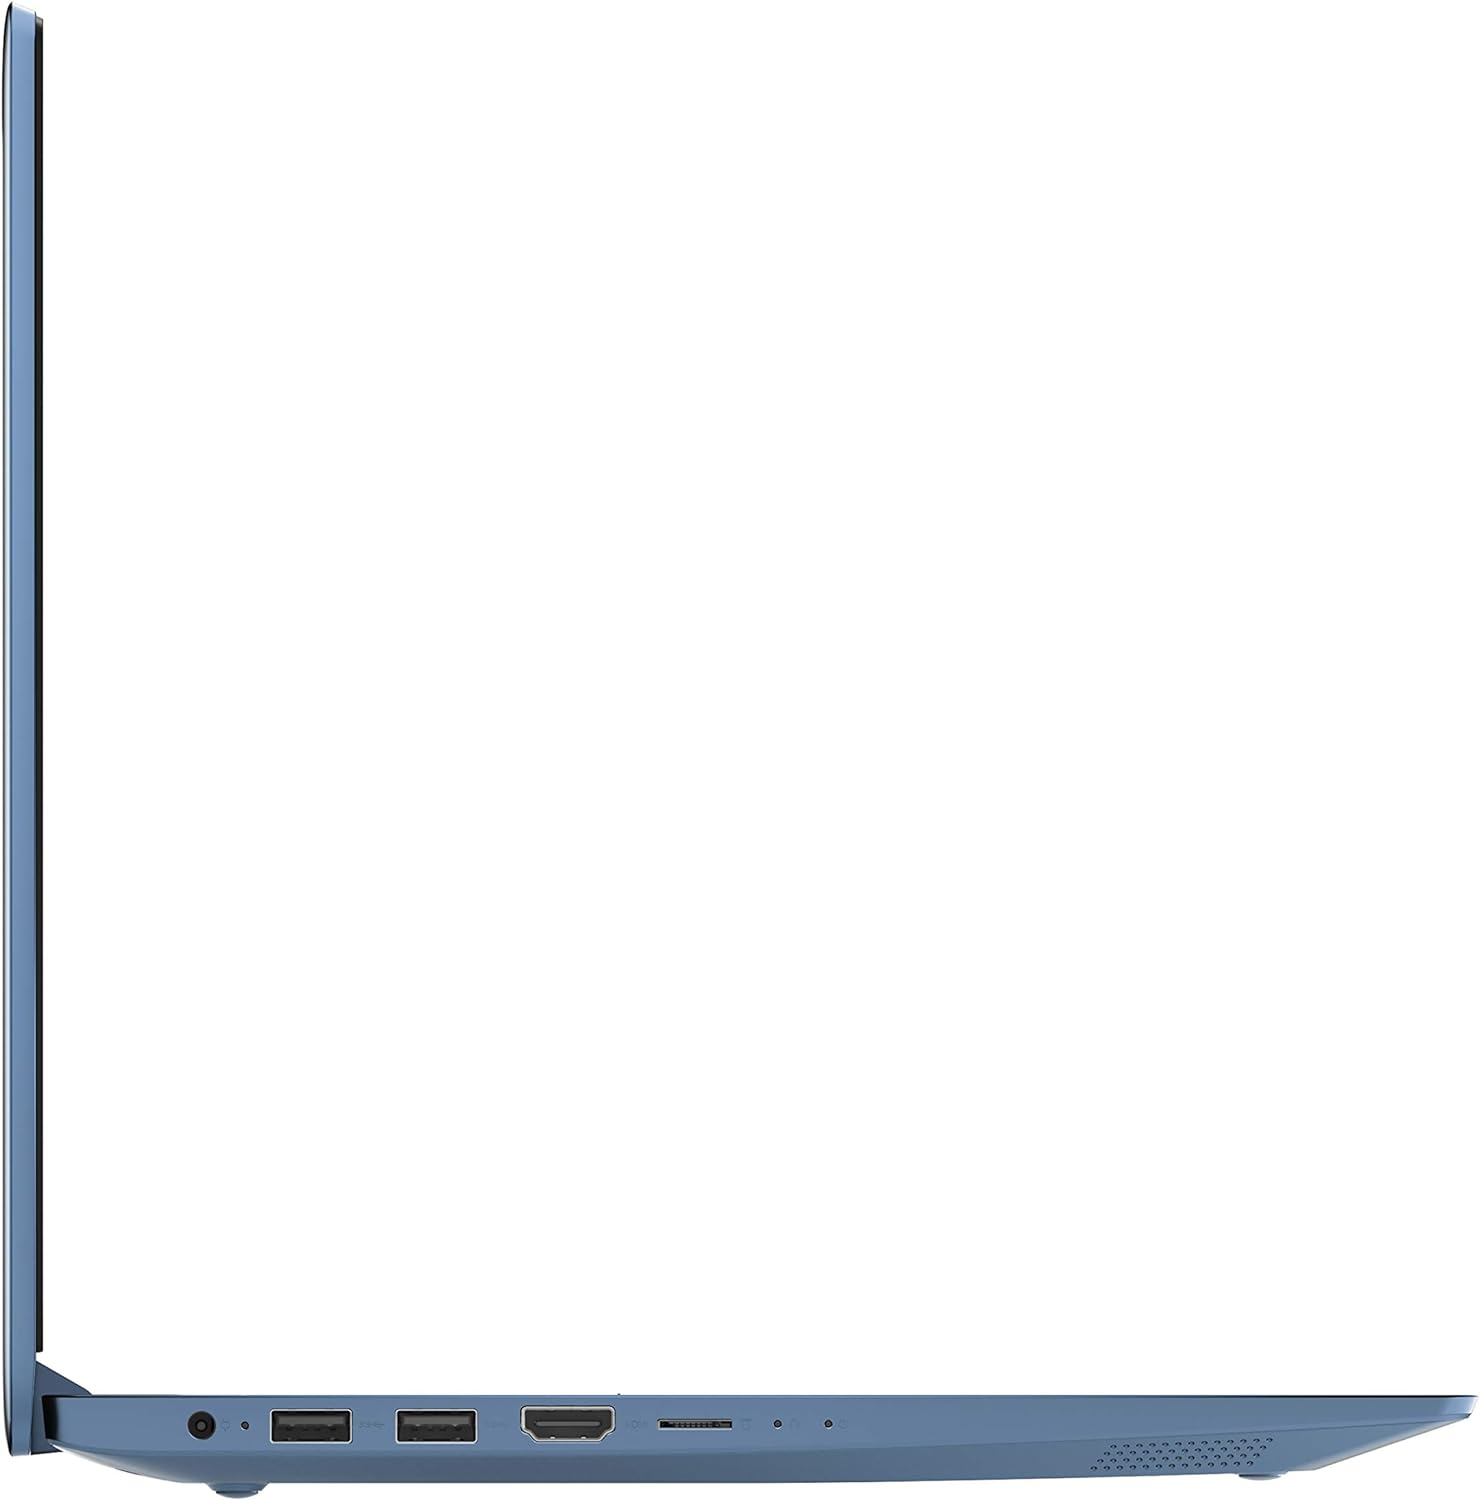 Lenovo IdeaPad 1 14 Laptop, 14.0 HD Display, Intel Celeron N4020, 4GB RAM, 64GB Storage, Intel UHD Graphics 600, Win 10 in S Mode, Ice Blue